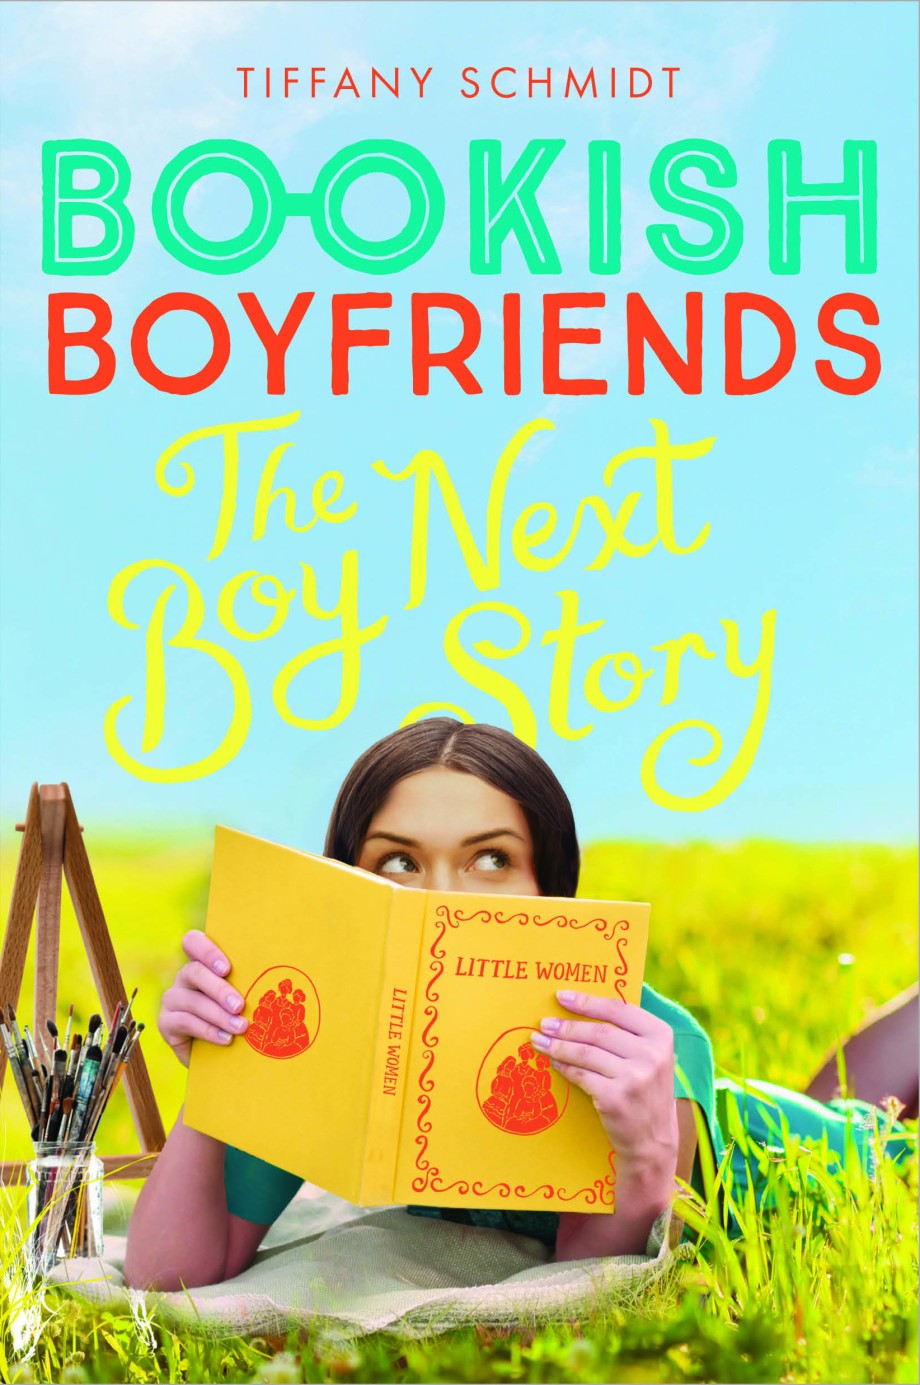 Boy Next Story A Bookish Boyfriends Novel